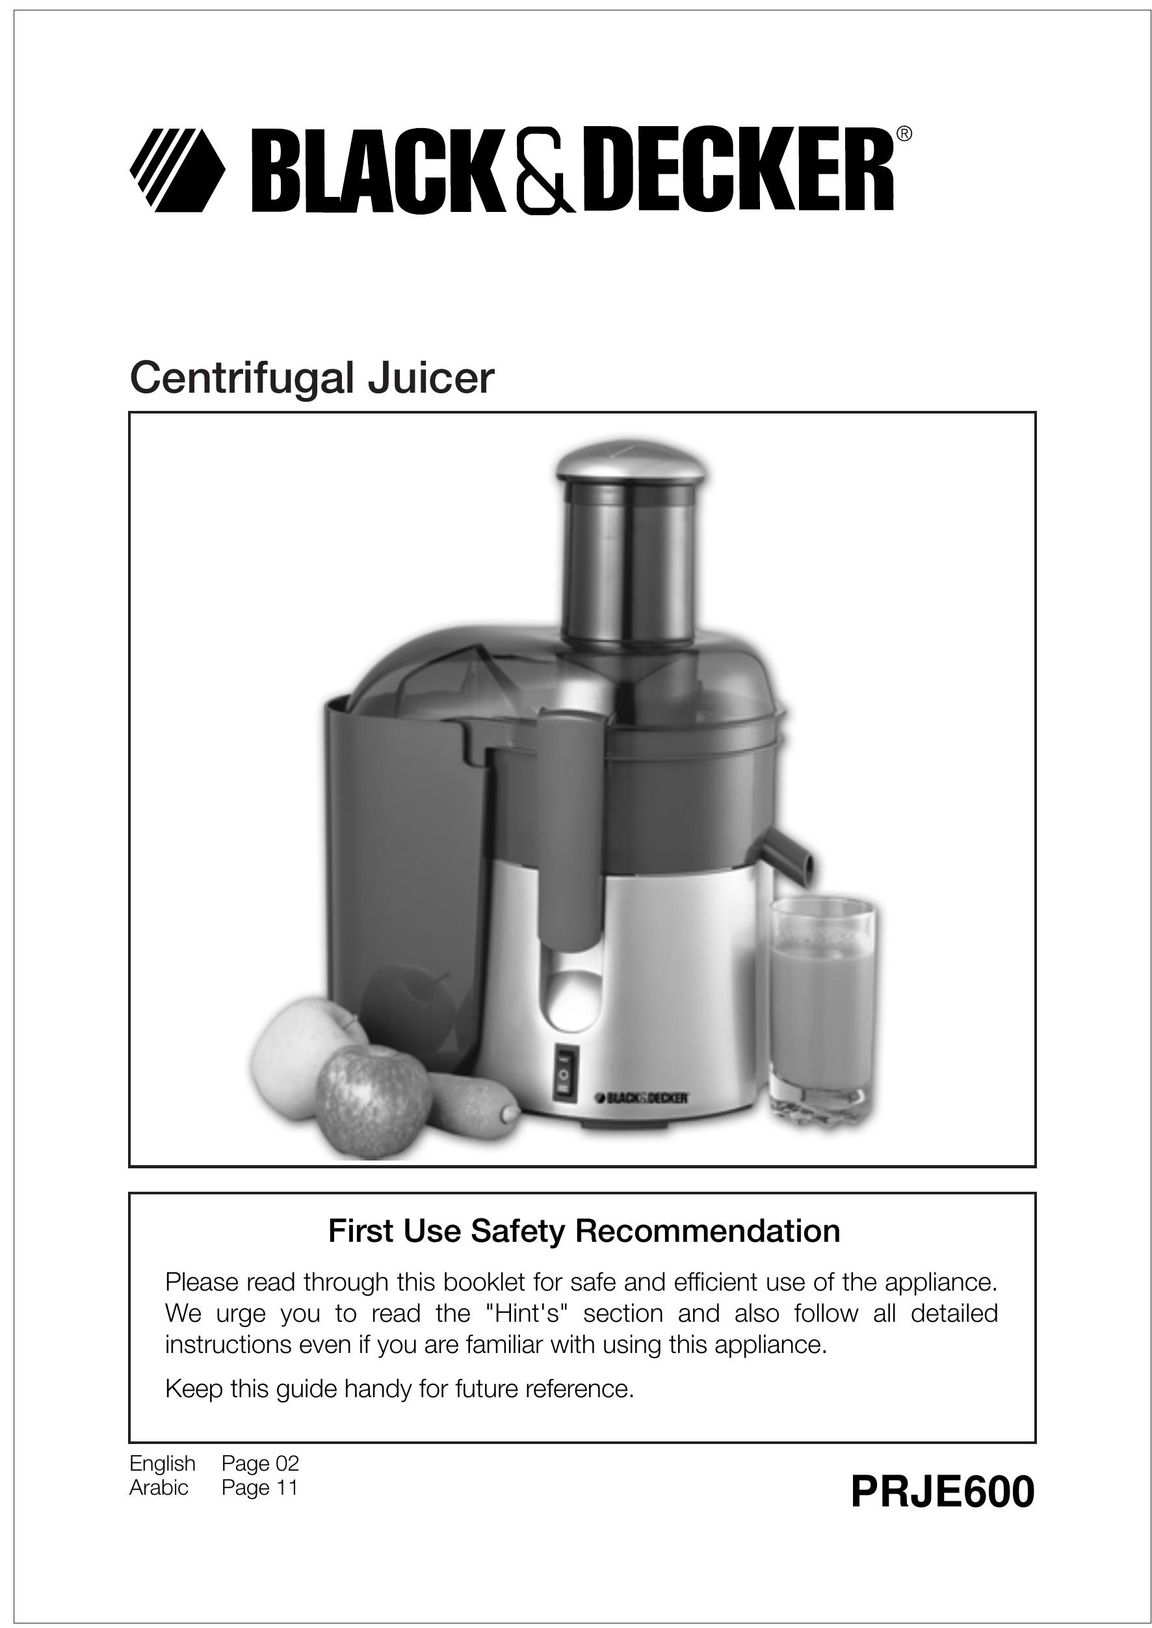 Black & Decker PRJE600 Juicer User Manual